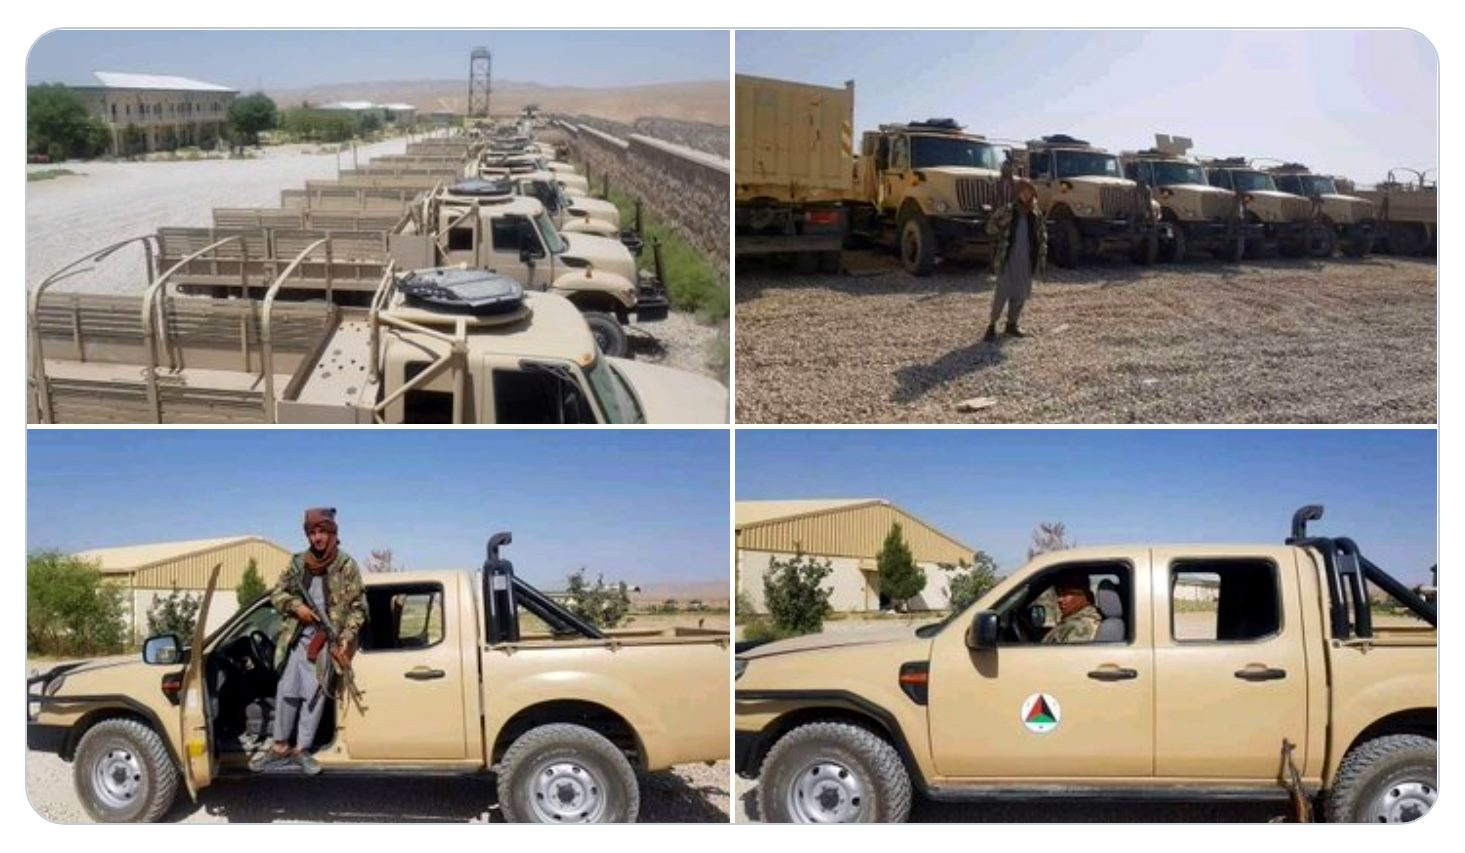 Taliban captured an ANA base intact, including vehicles